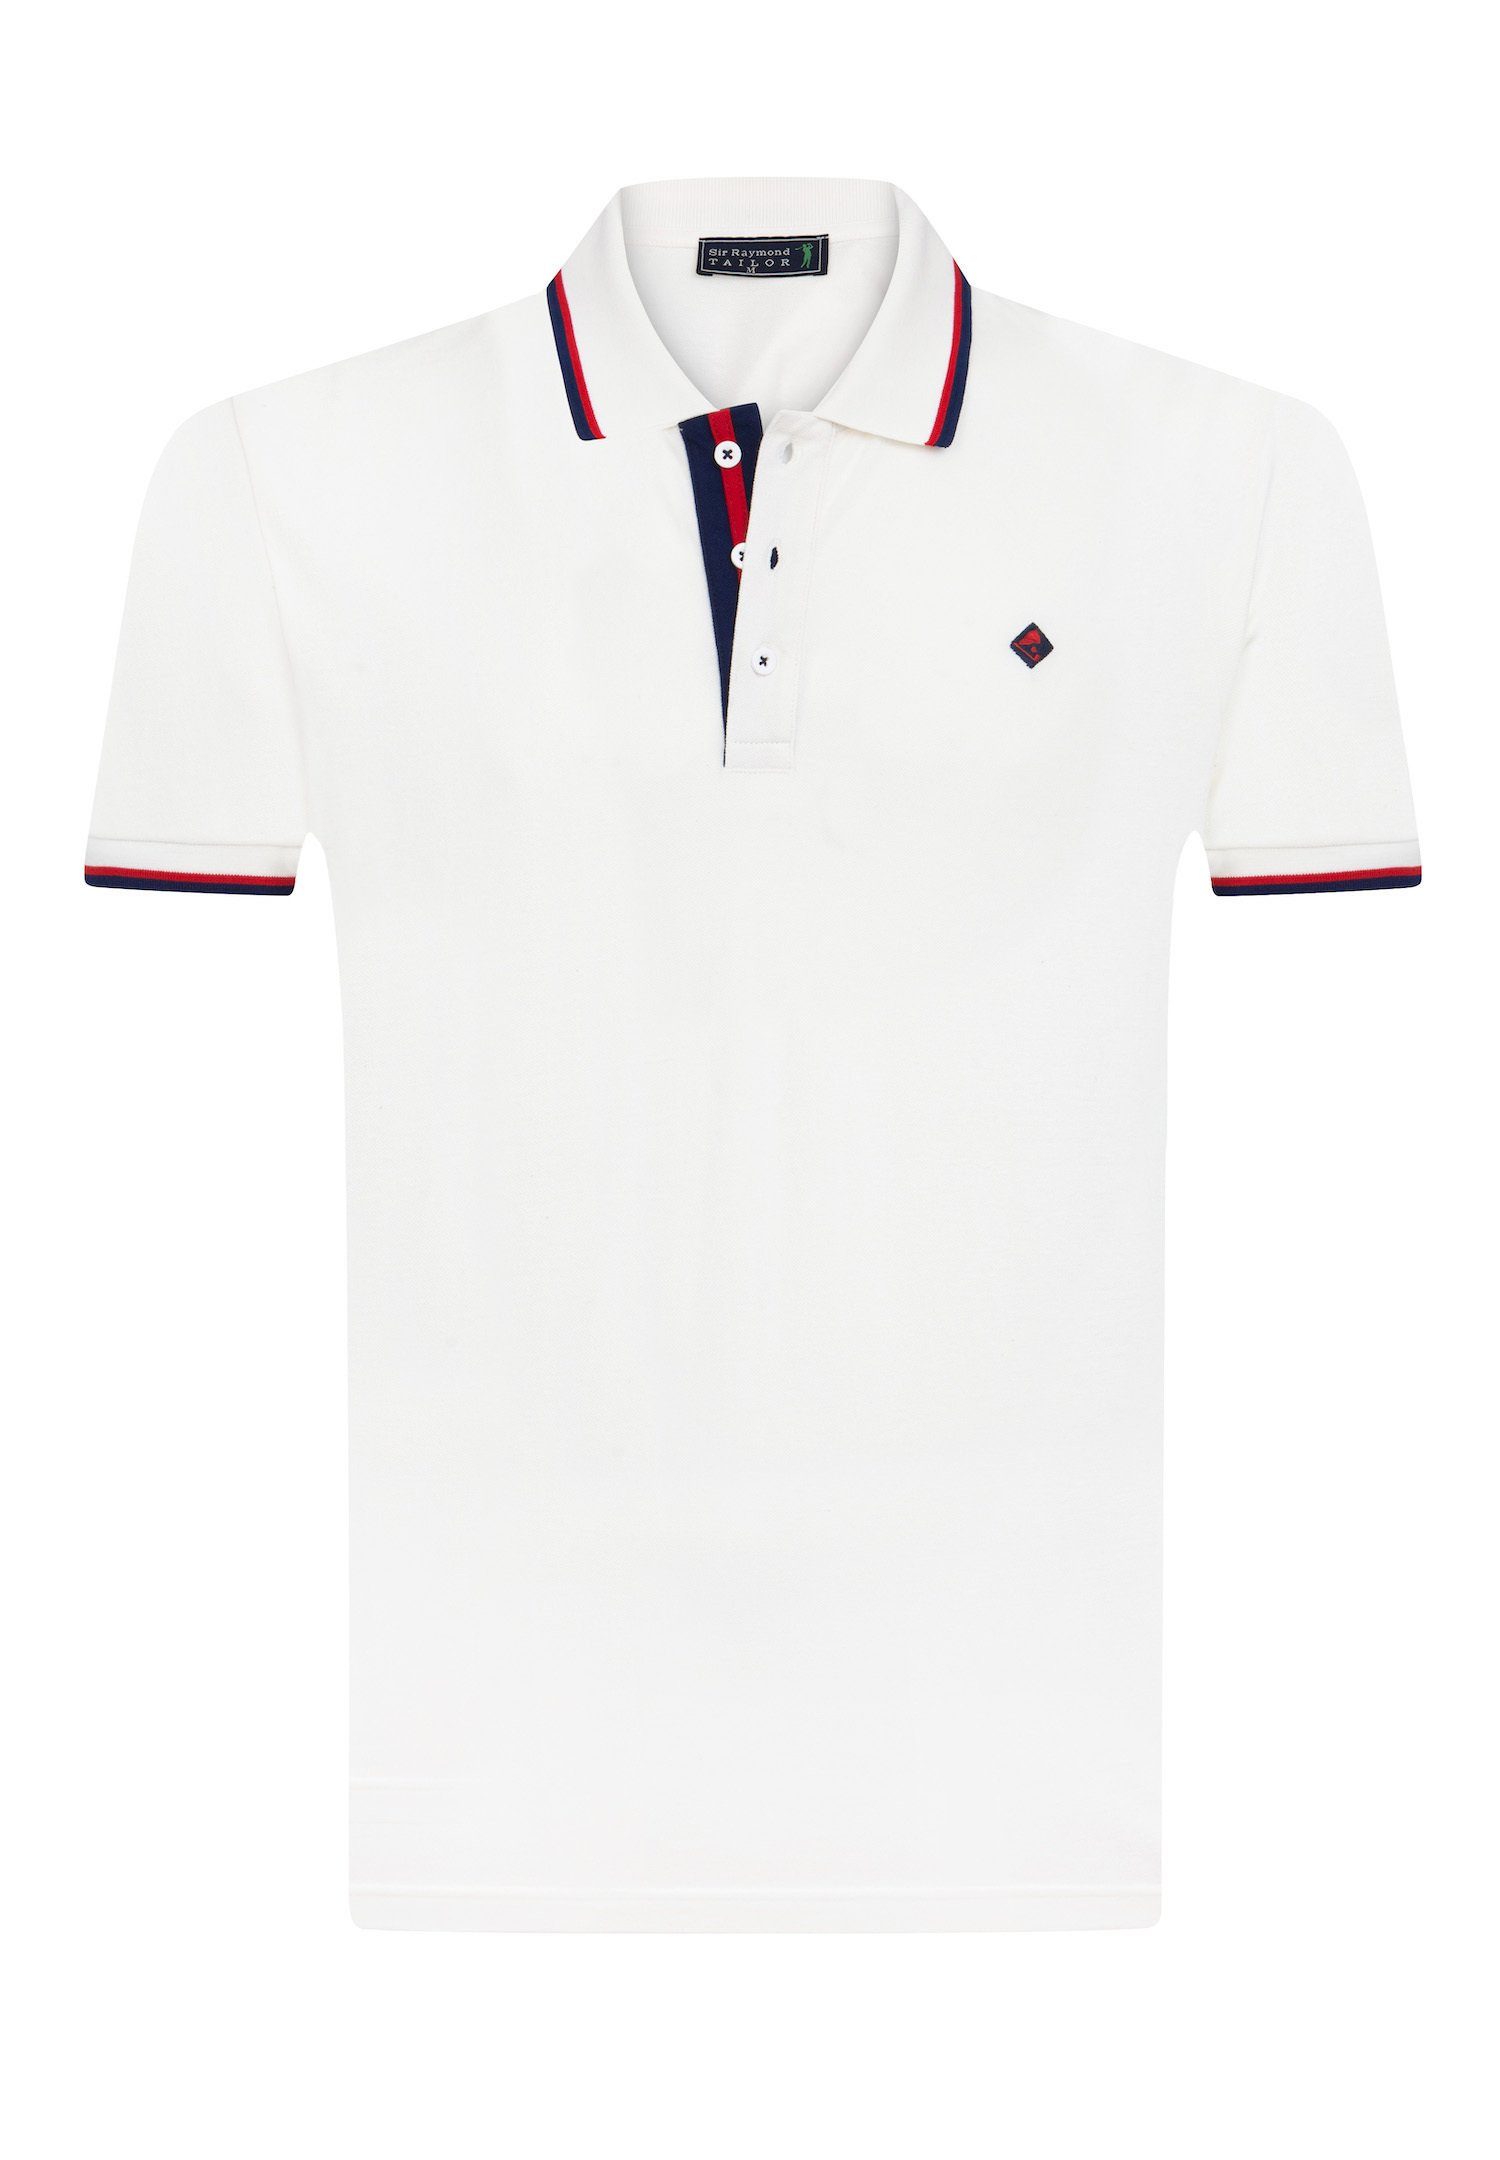 Sir Raymond Tailor Poloshirt Amsterdam White-Red